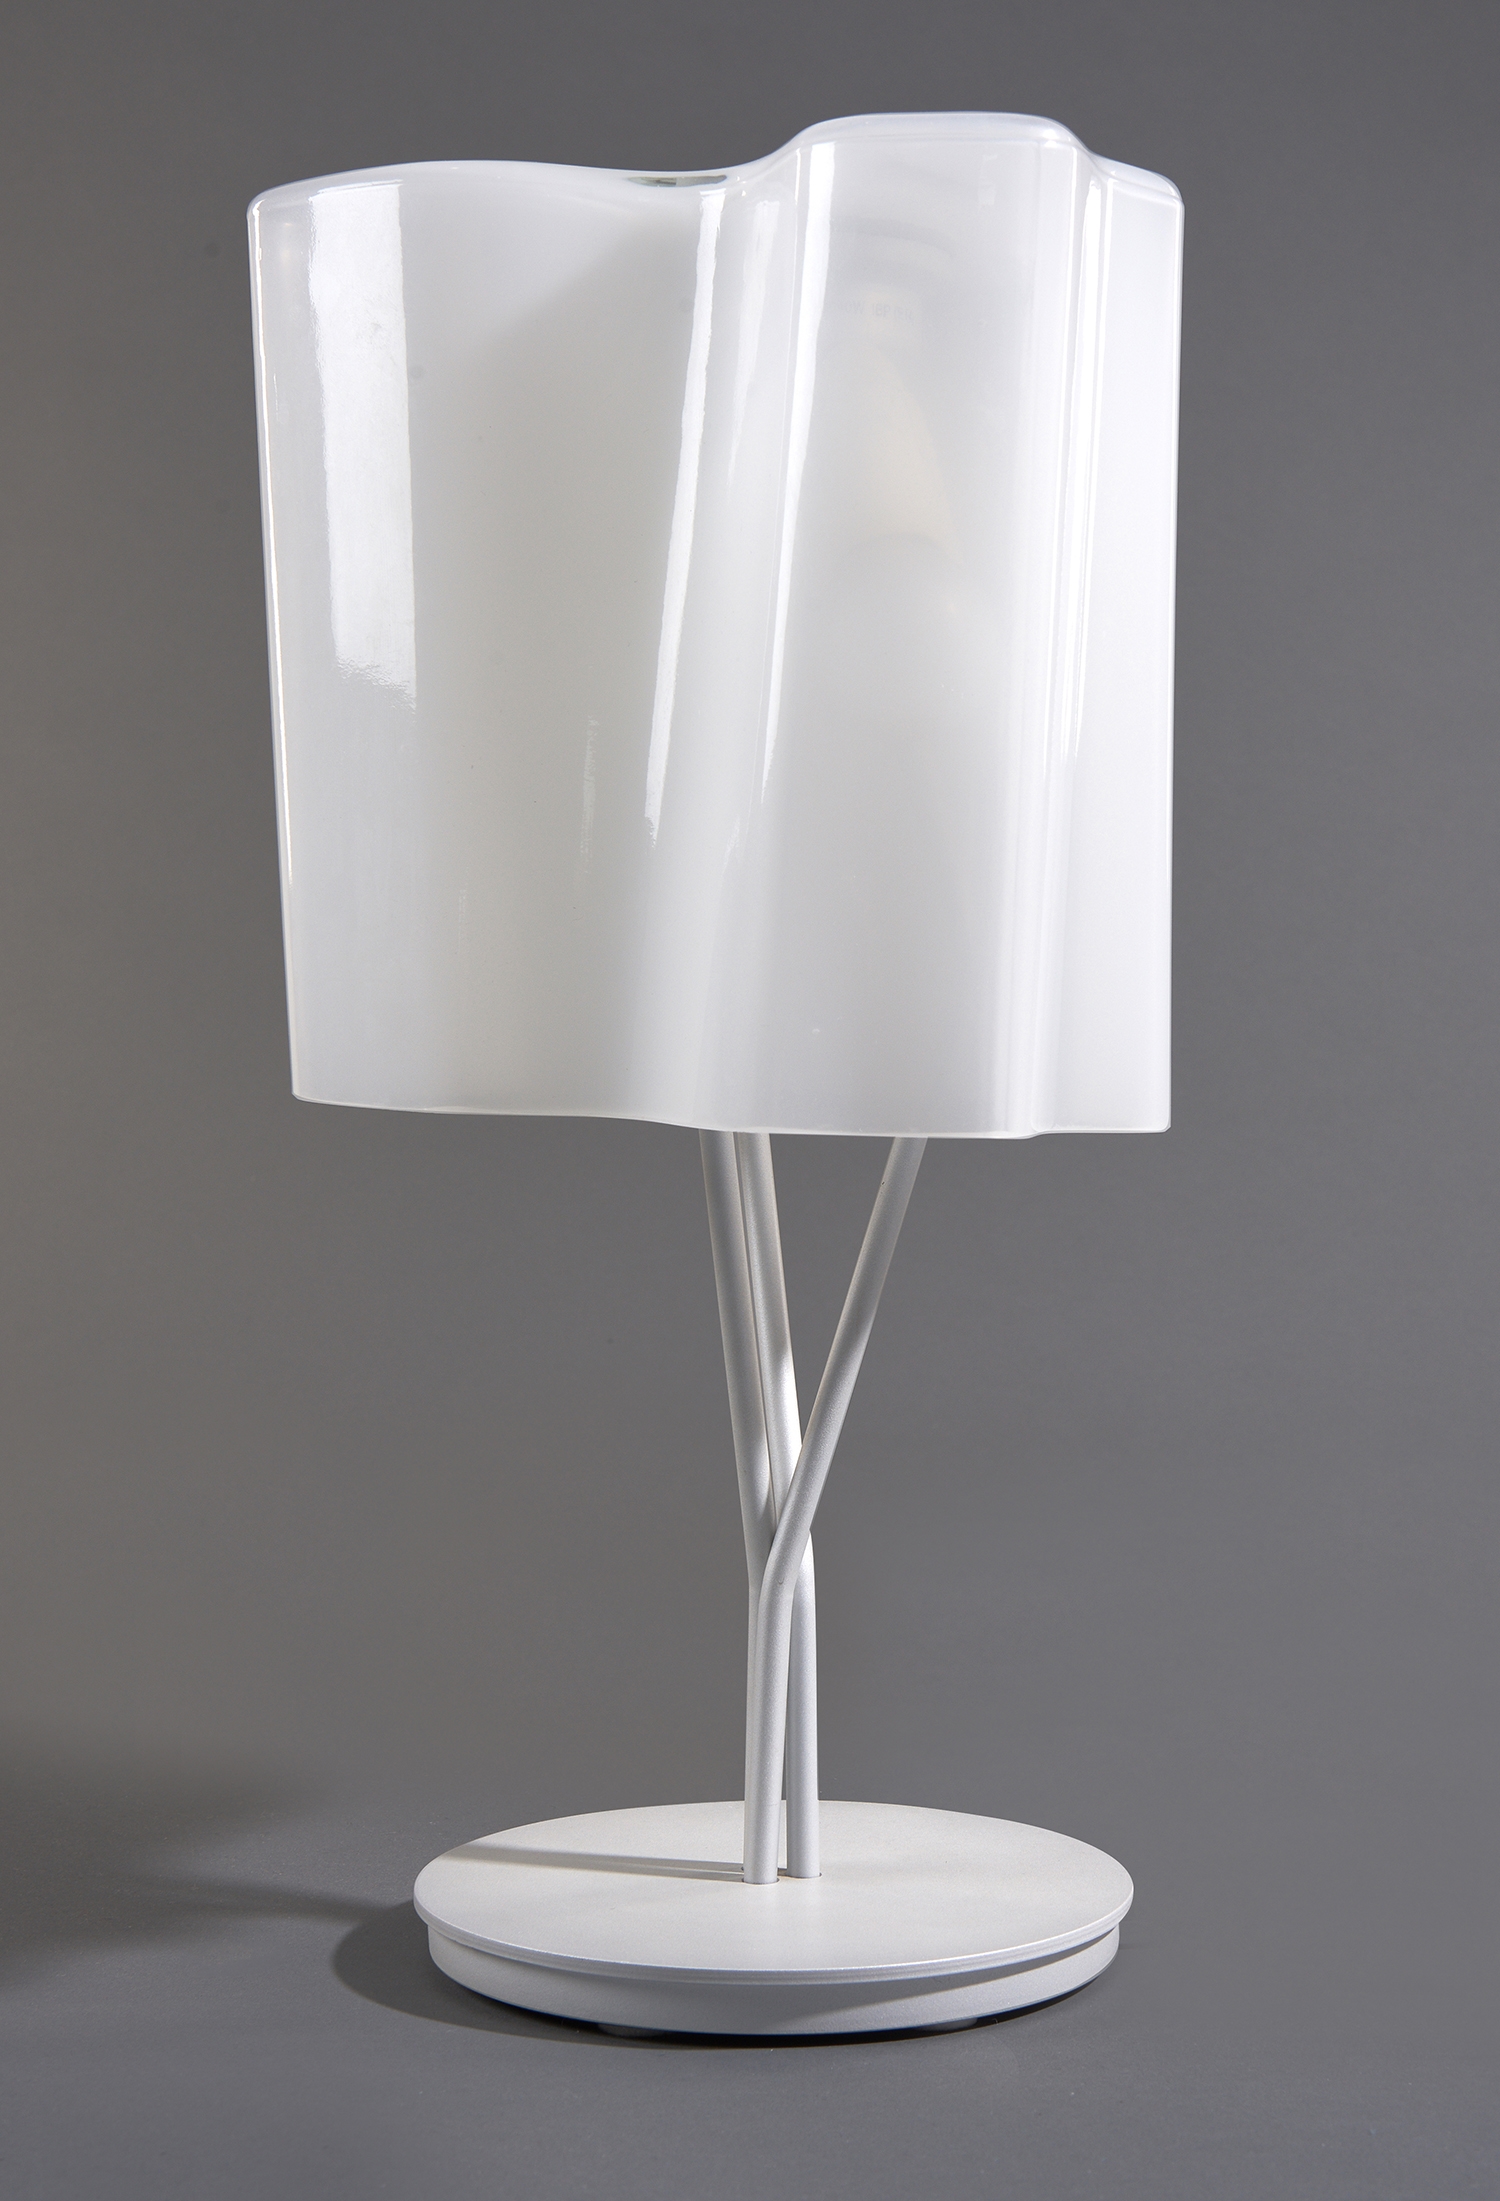 'LOGICO MINI' TABLE LAMP FOR ARTEMIDE